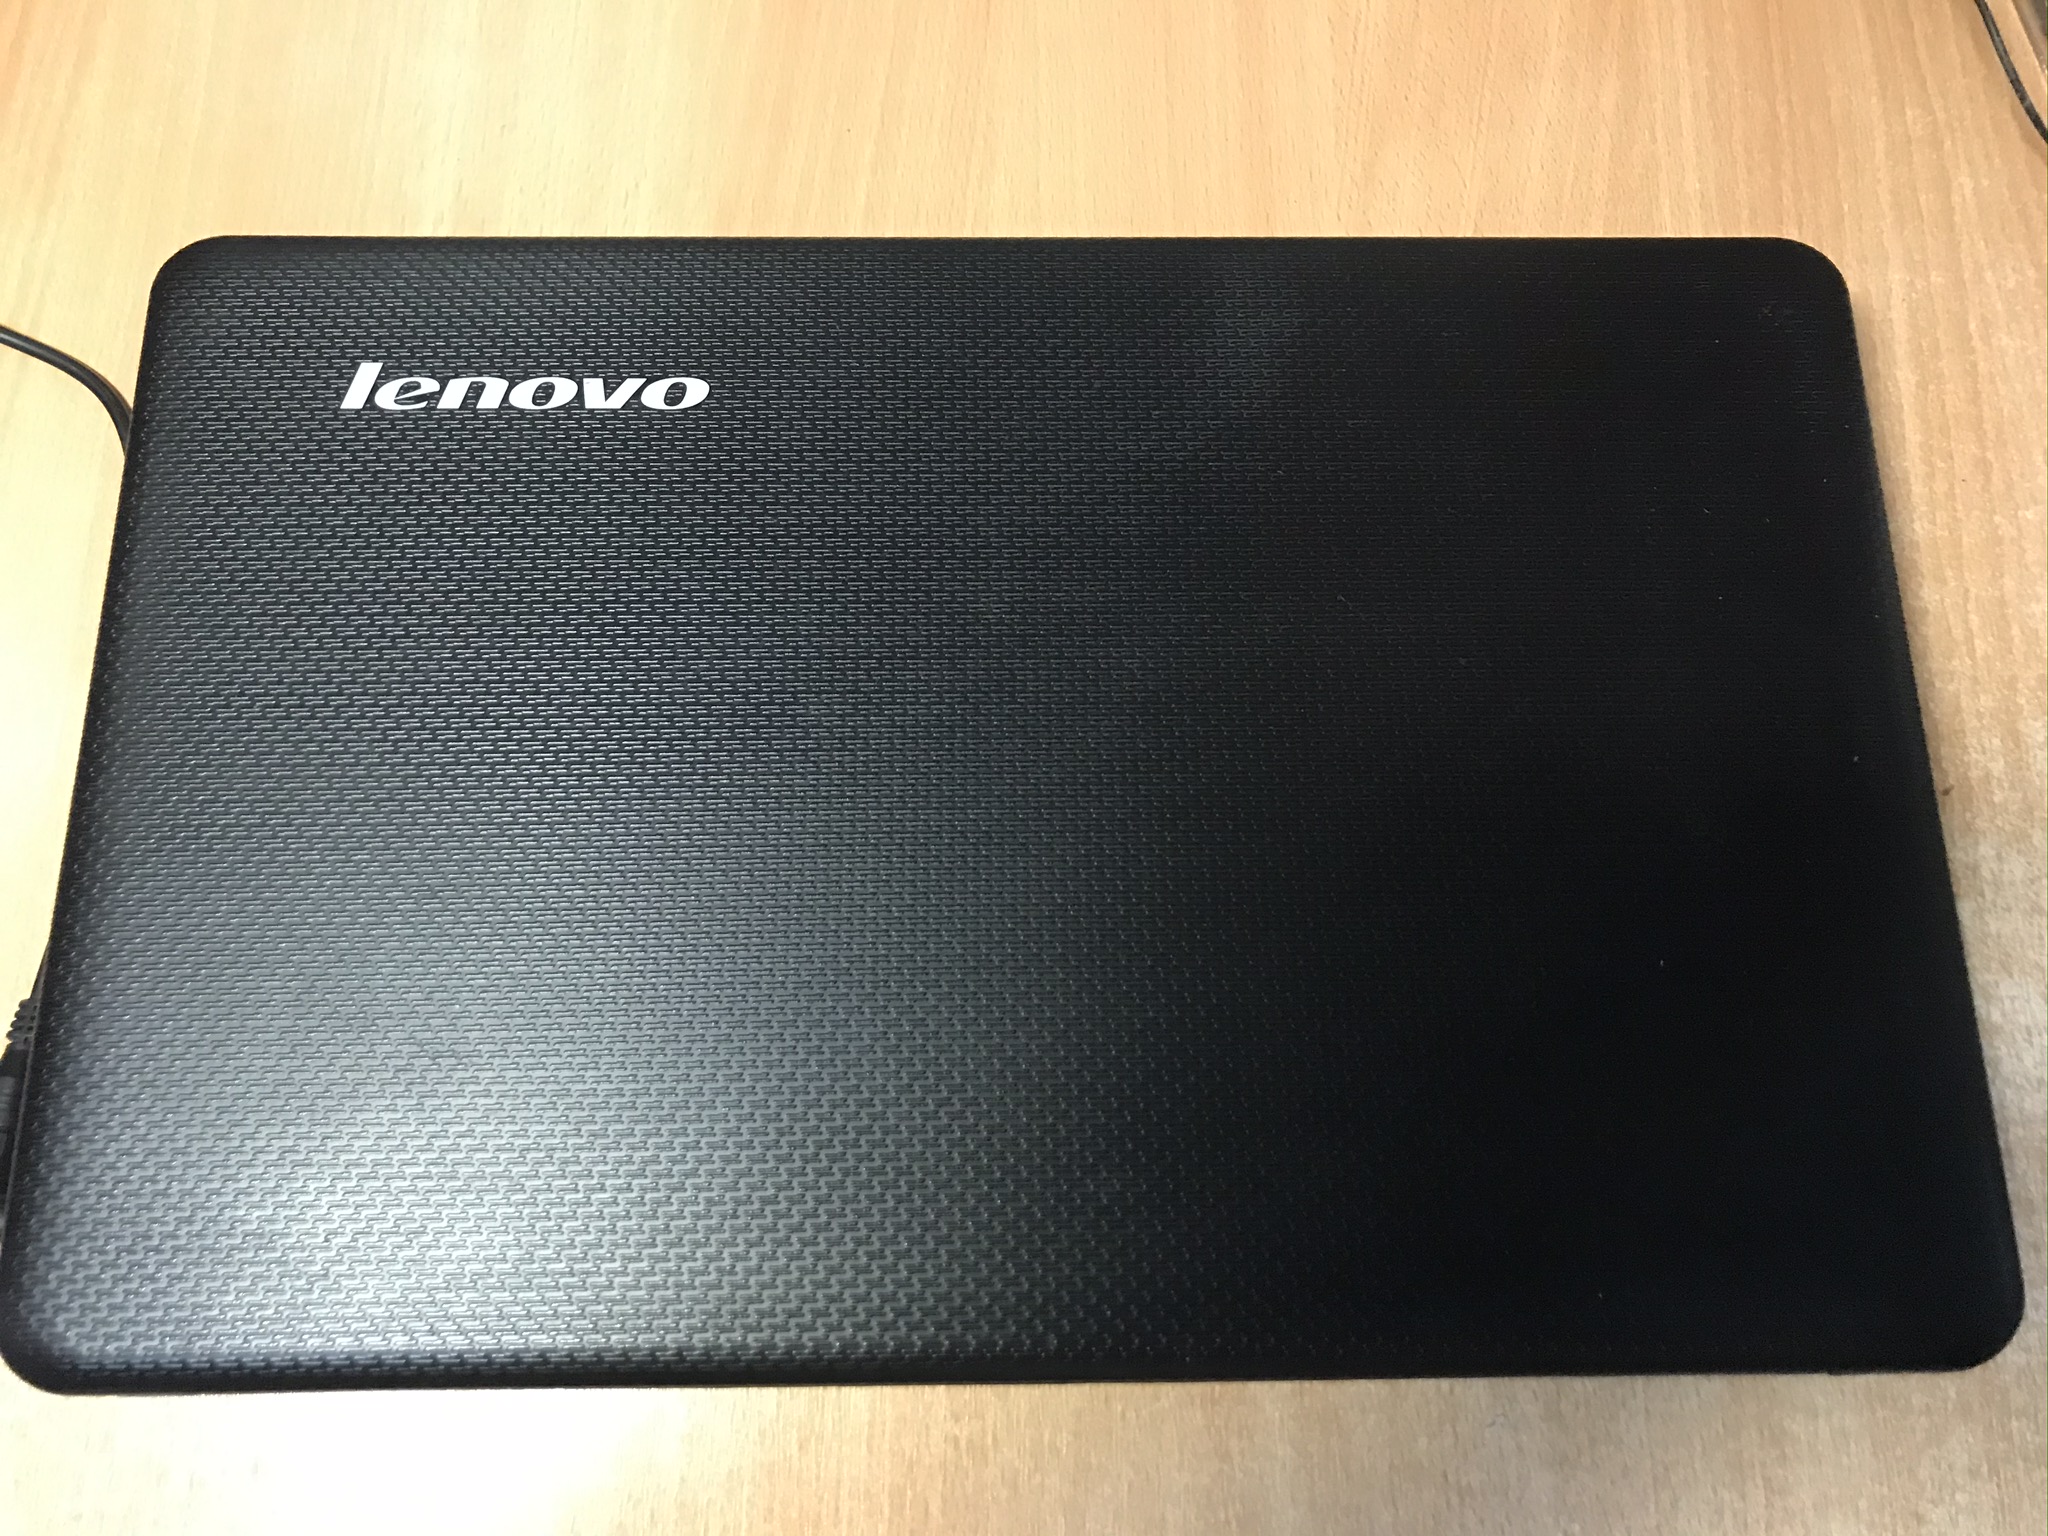 Панель ноутбука леново. Note Lenovo book s120. Сертификат на ноутбук Lenovo. Продам ноутбук Lenovo 5070 ОТС.25т.р89619888506..